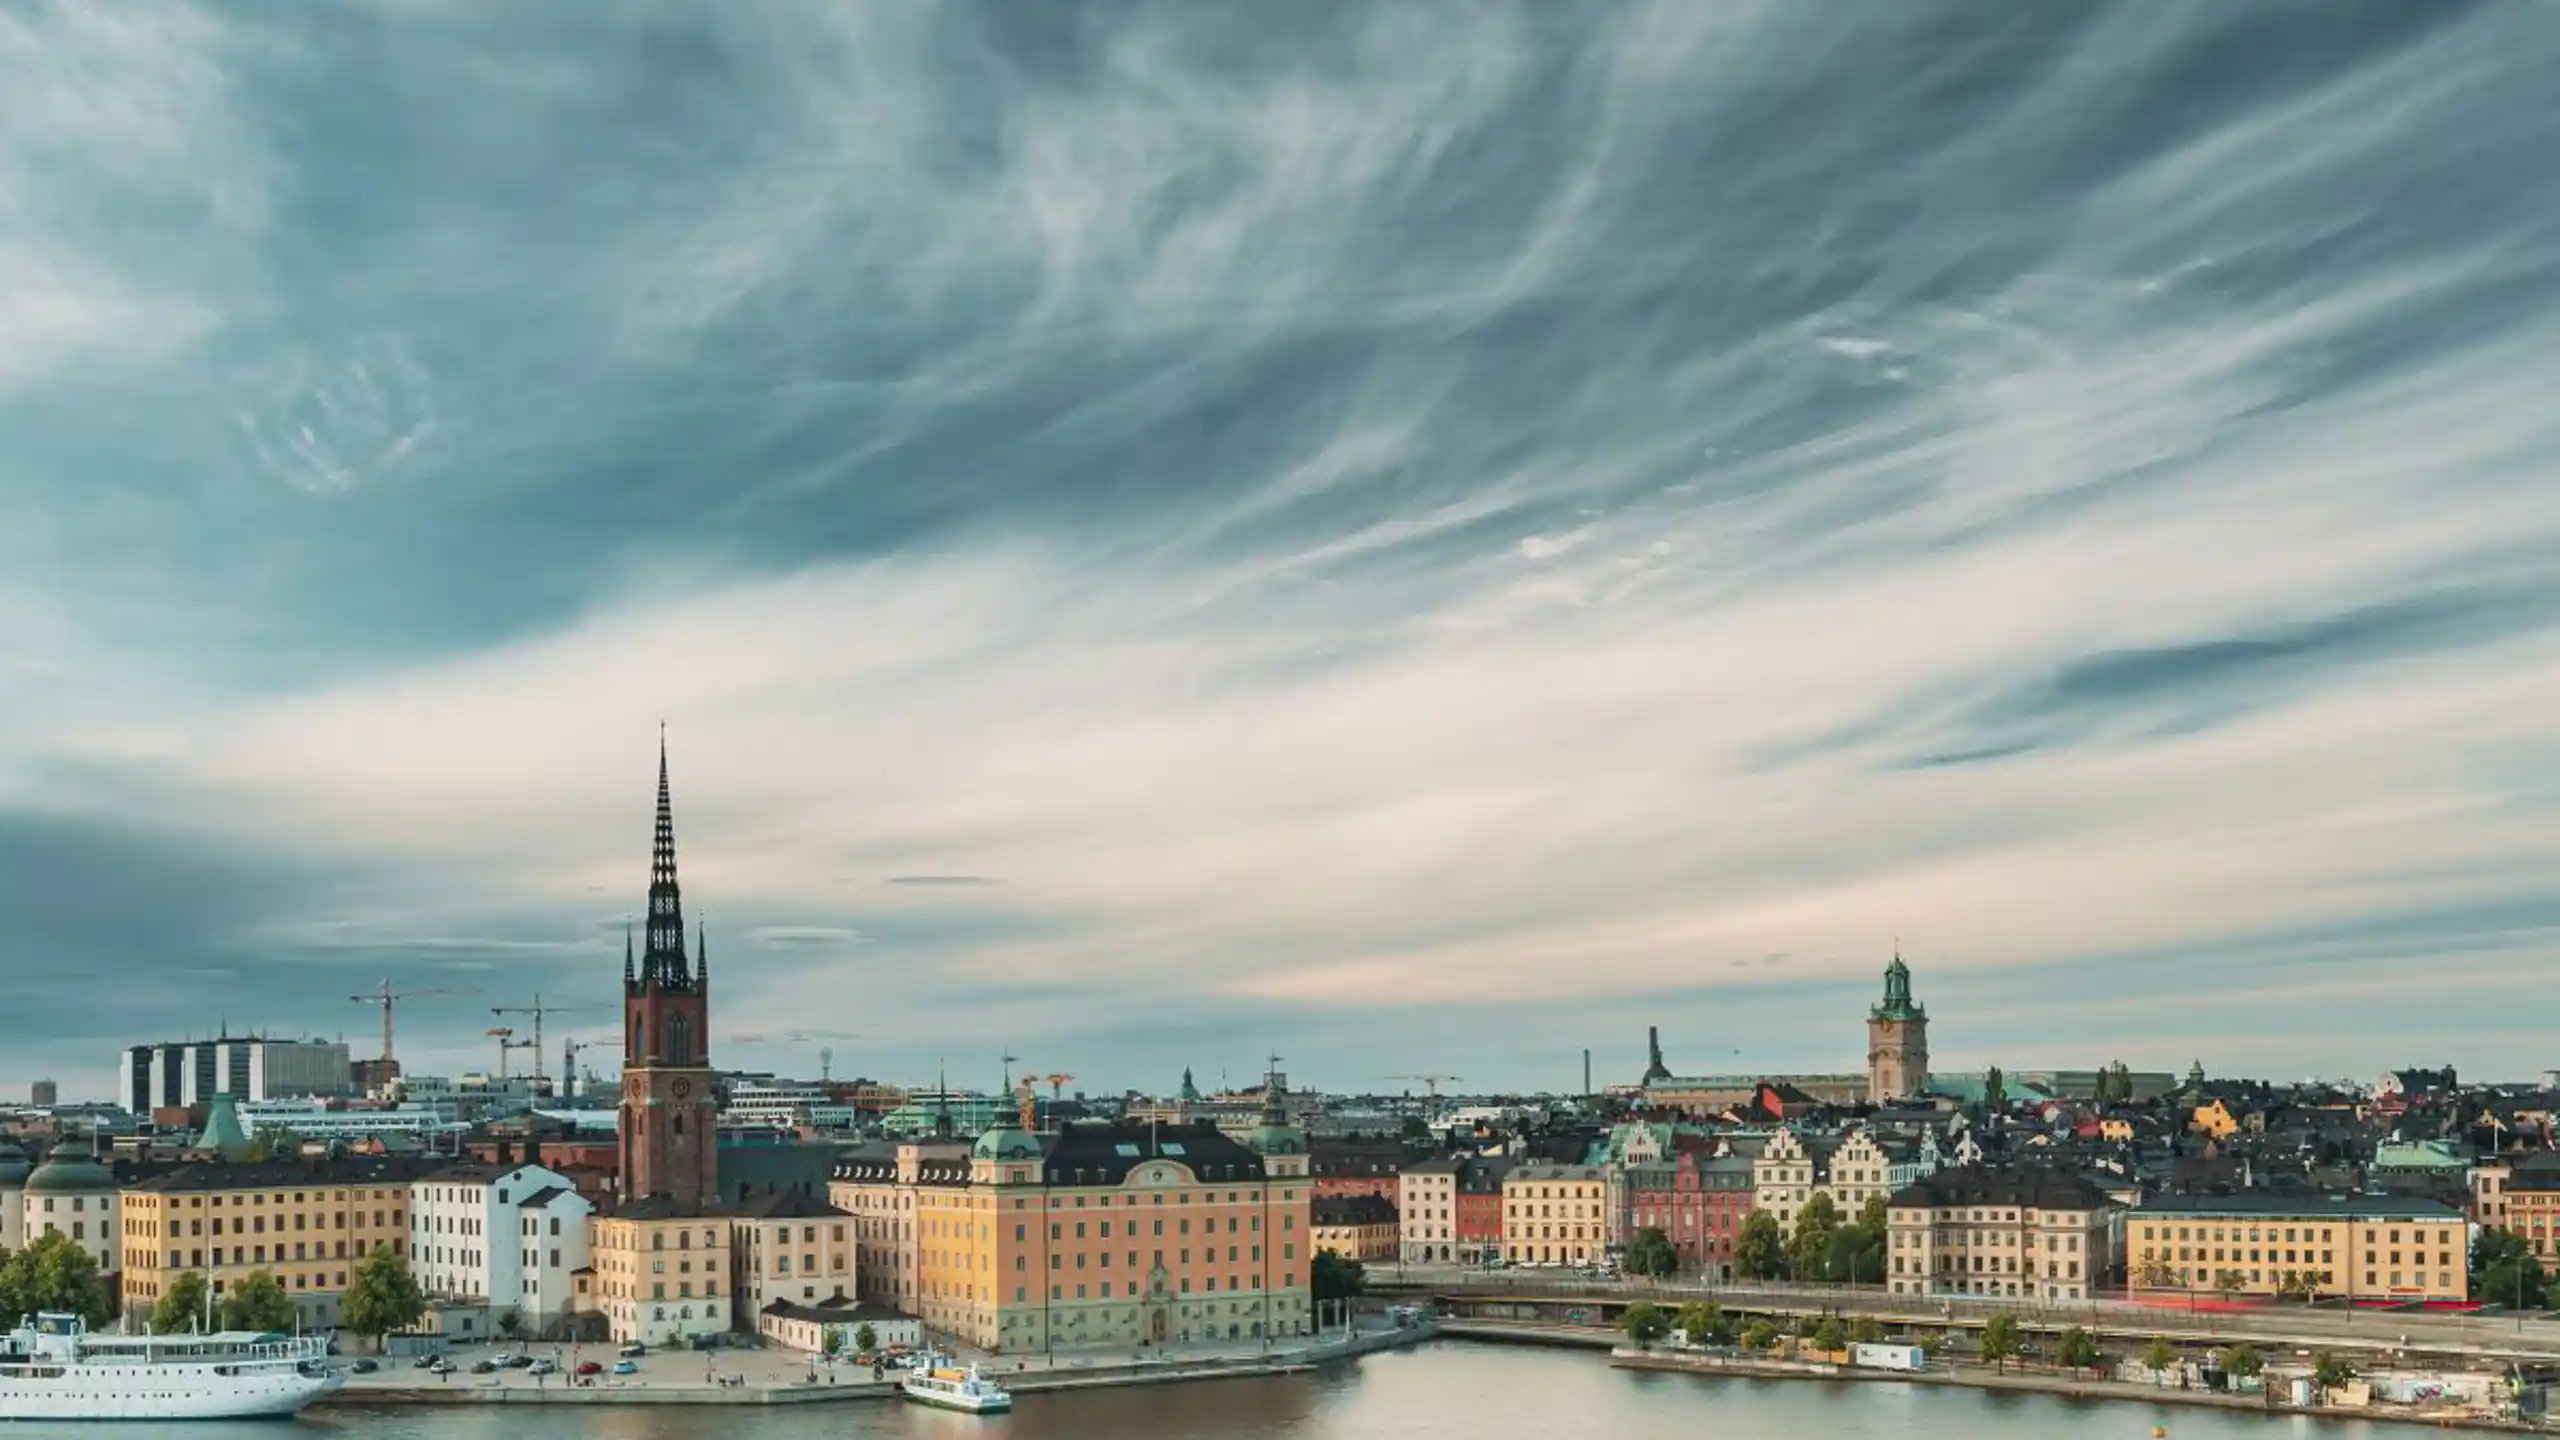 Stockholm Sweden Scenic Famous View Of Embankmen 2023 11 27 04 58 48 Utc (2)